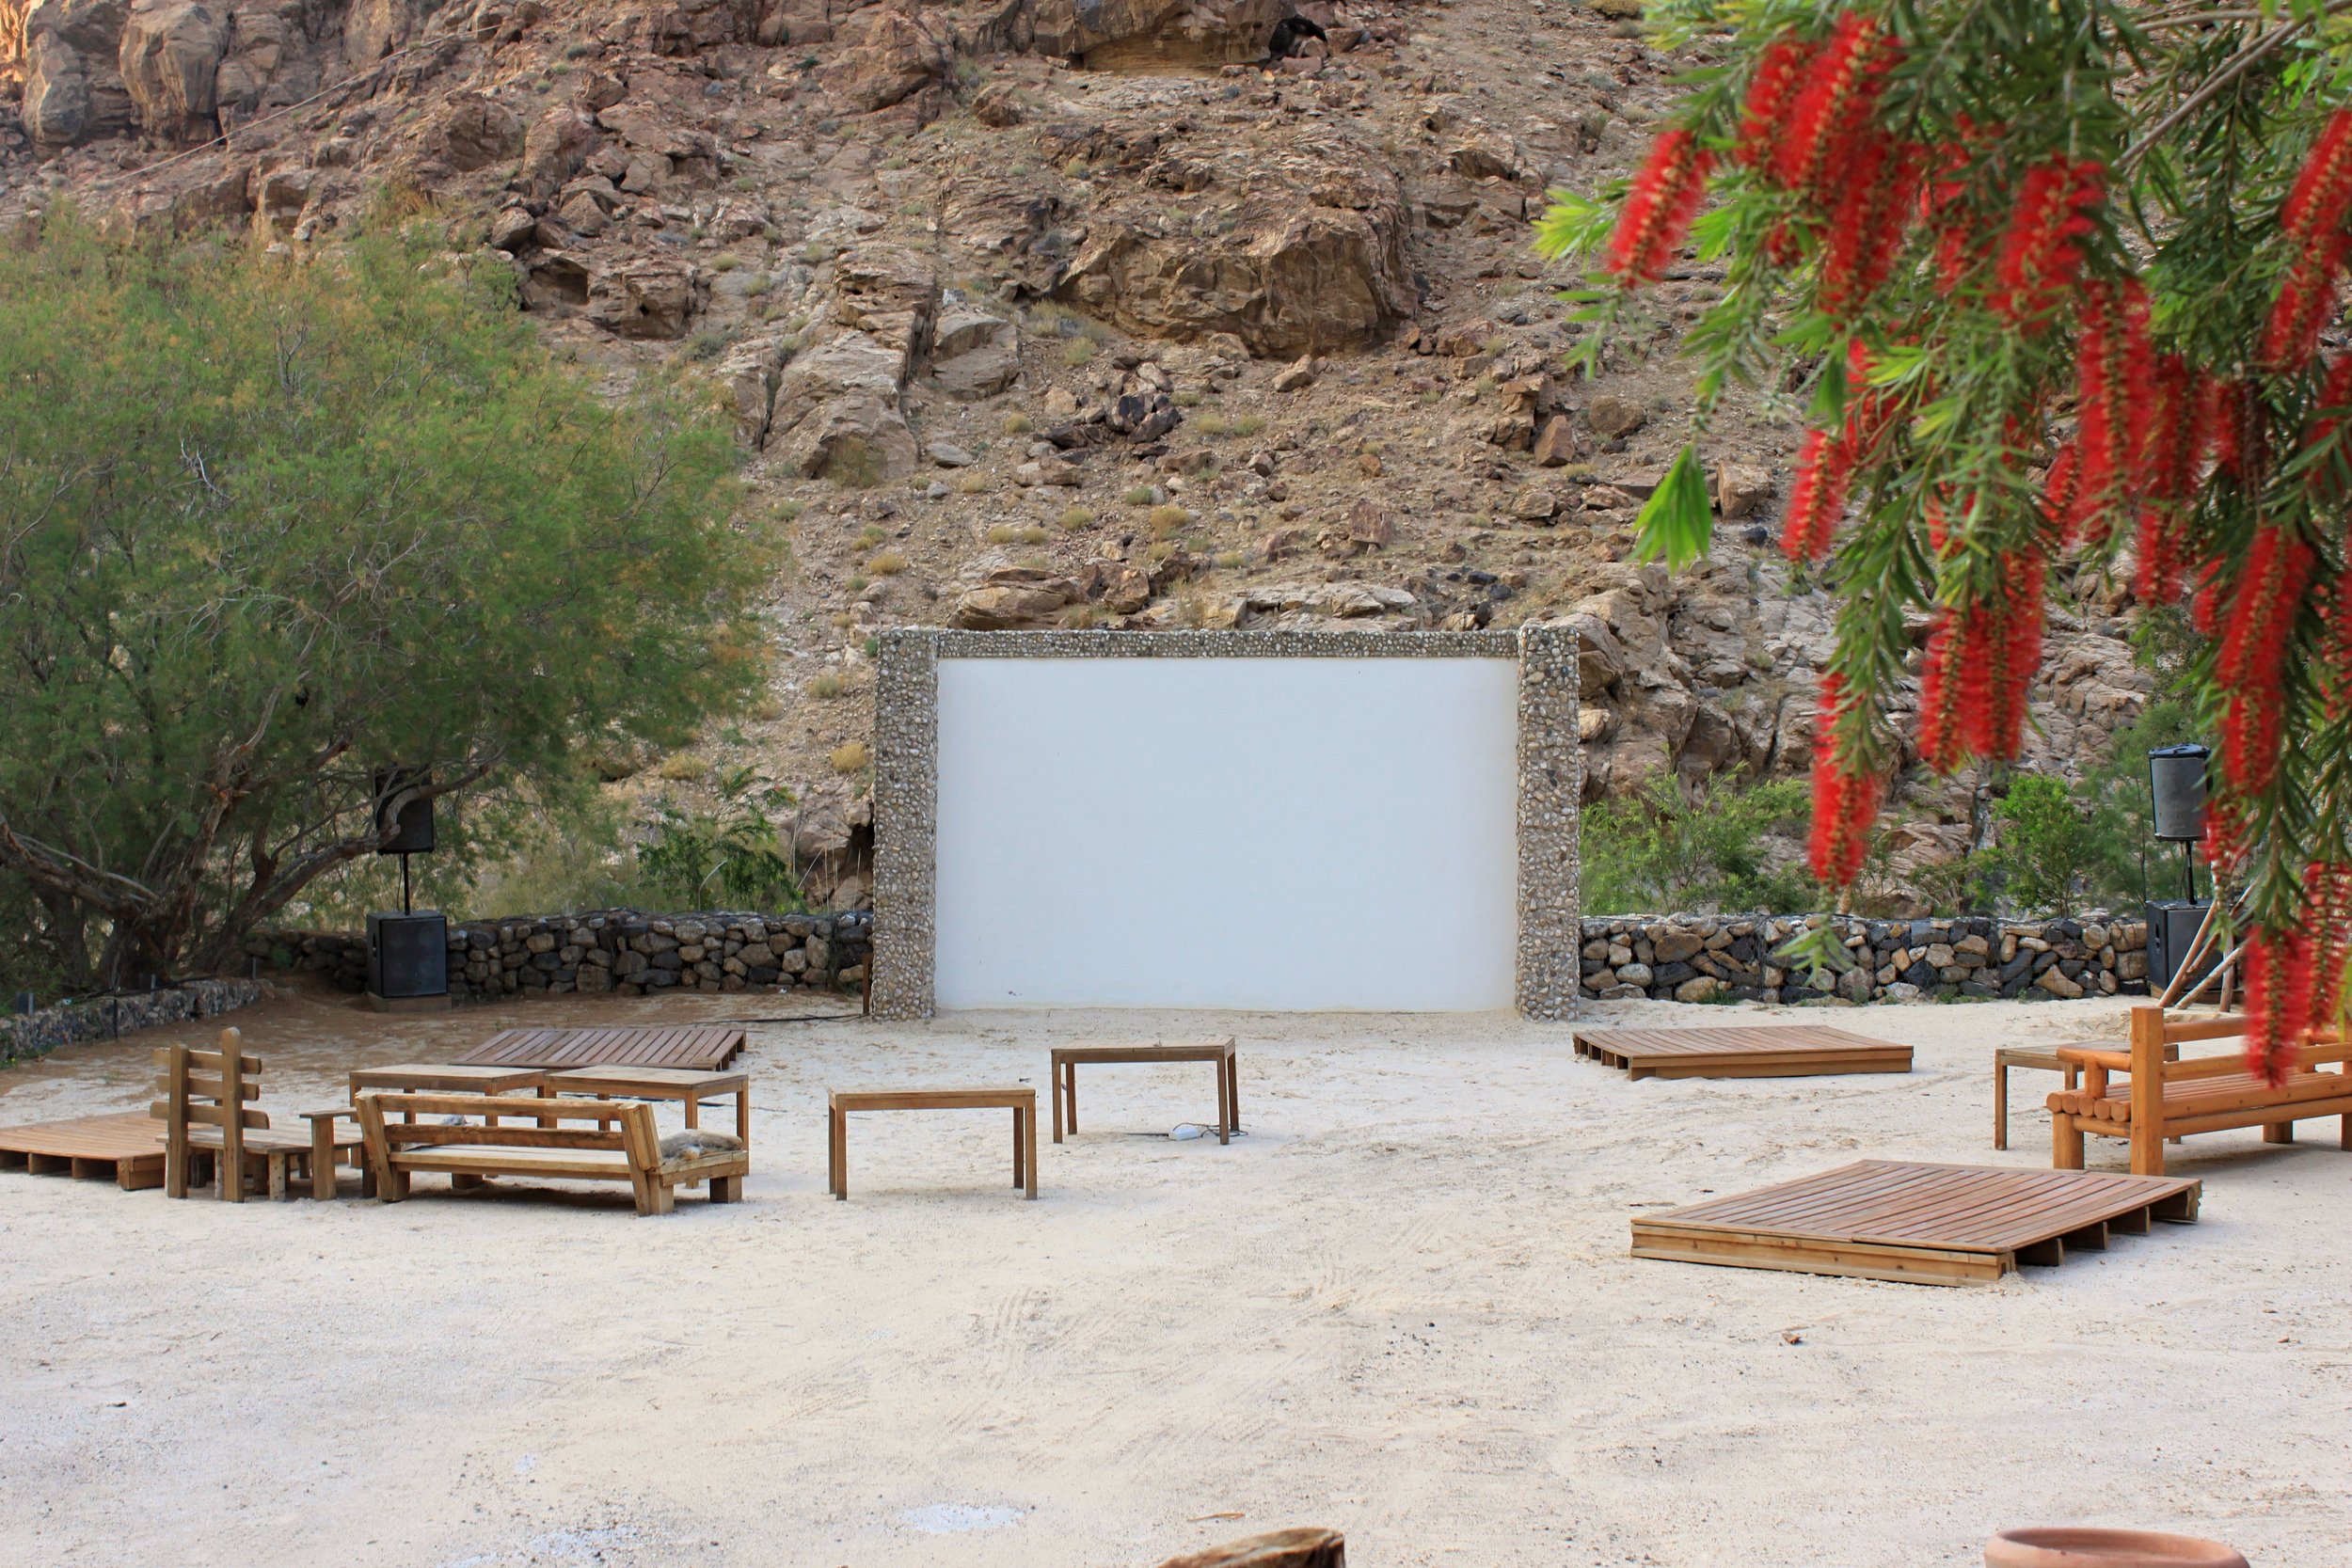 The outdoor cinema at the Ma’in Hot Springs Resort &amp; Spa in Jordan